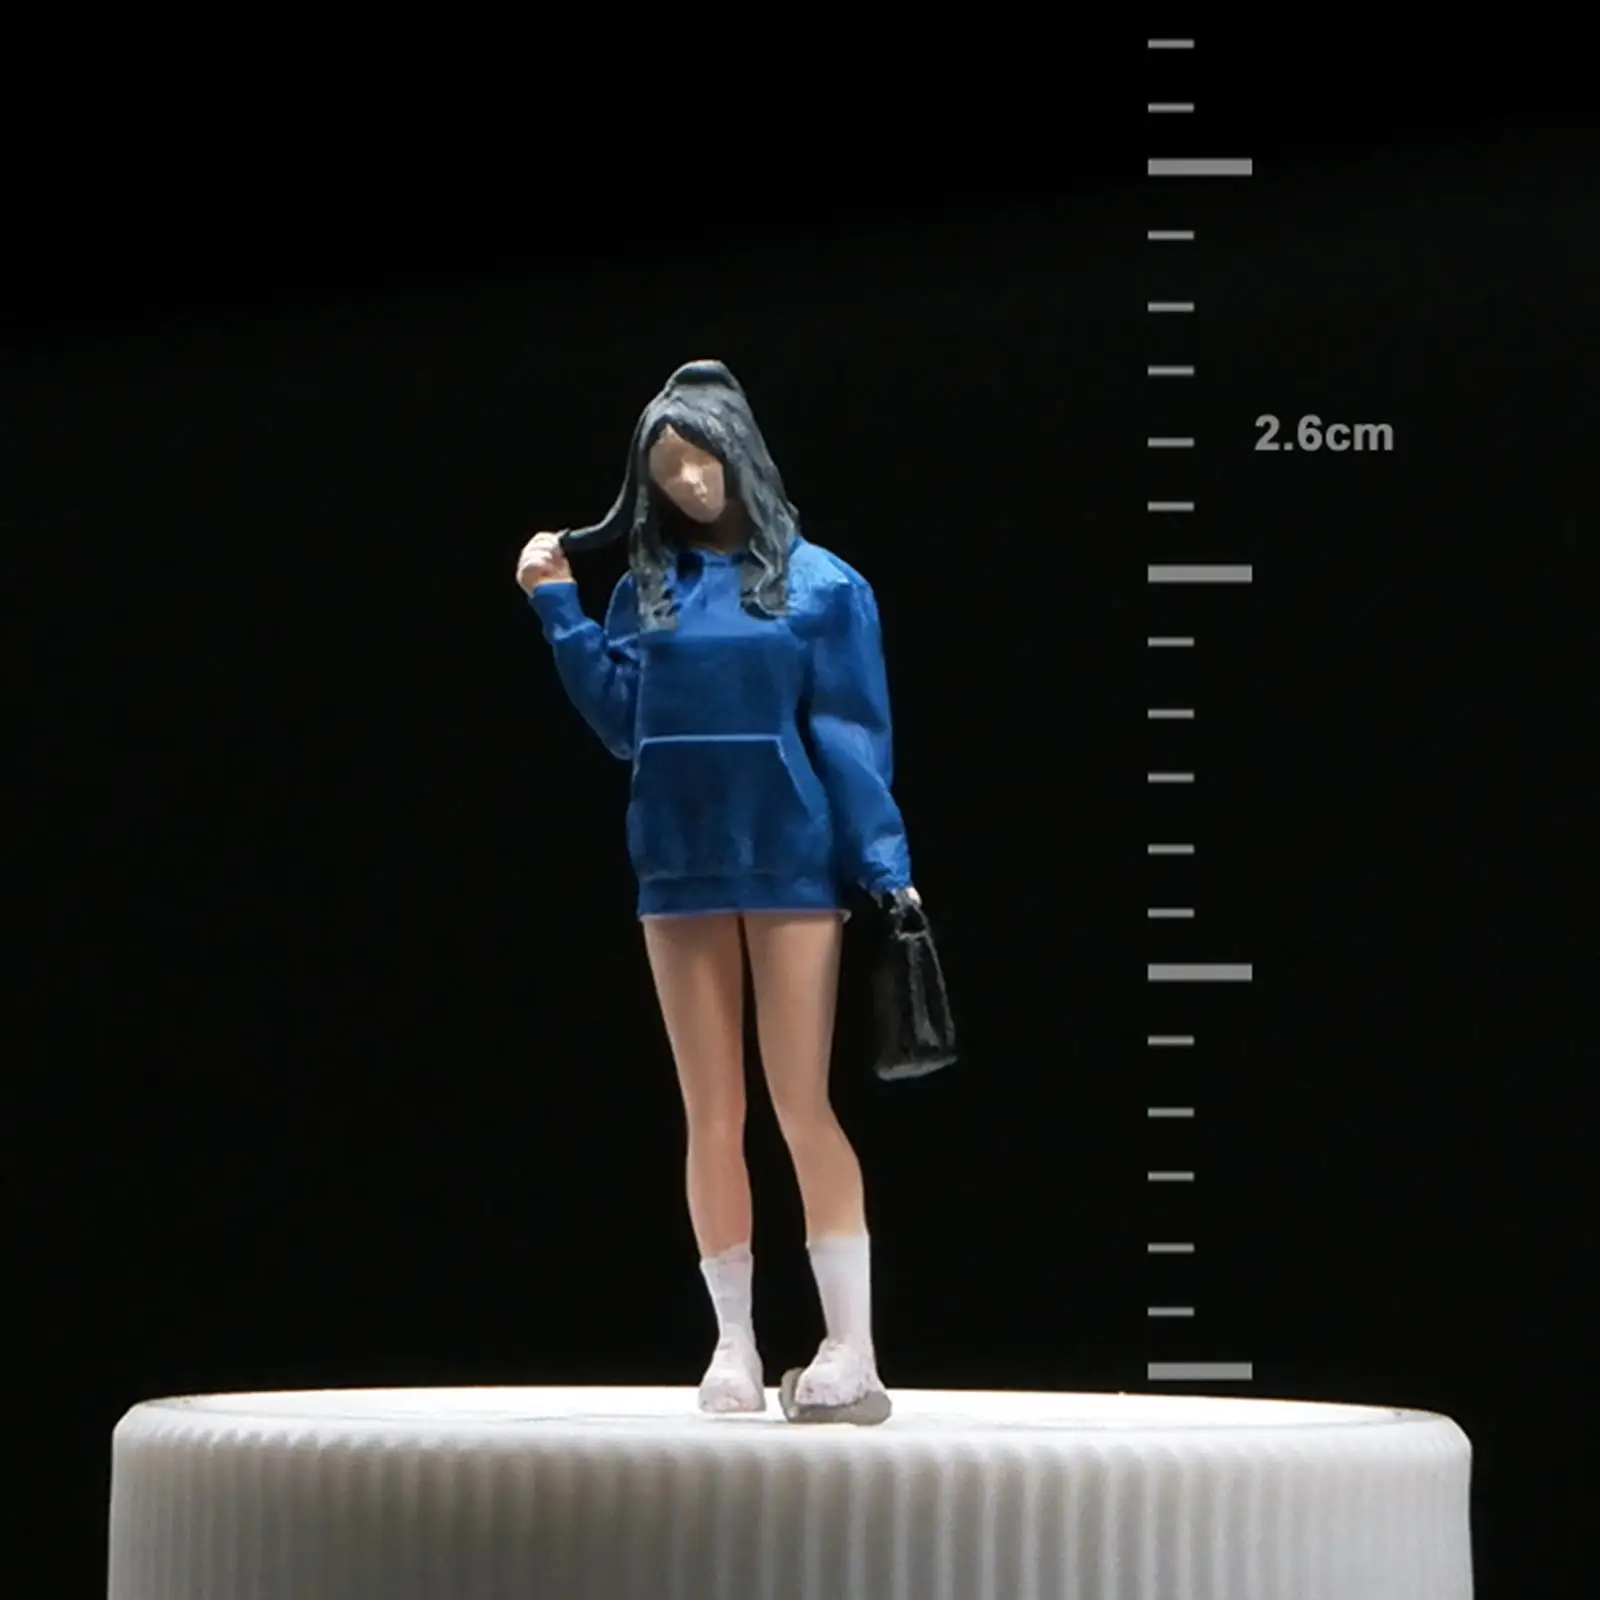 1/64 Scale People Figure Mini Architectural Miniature Diorama Girl Figure